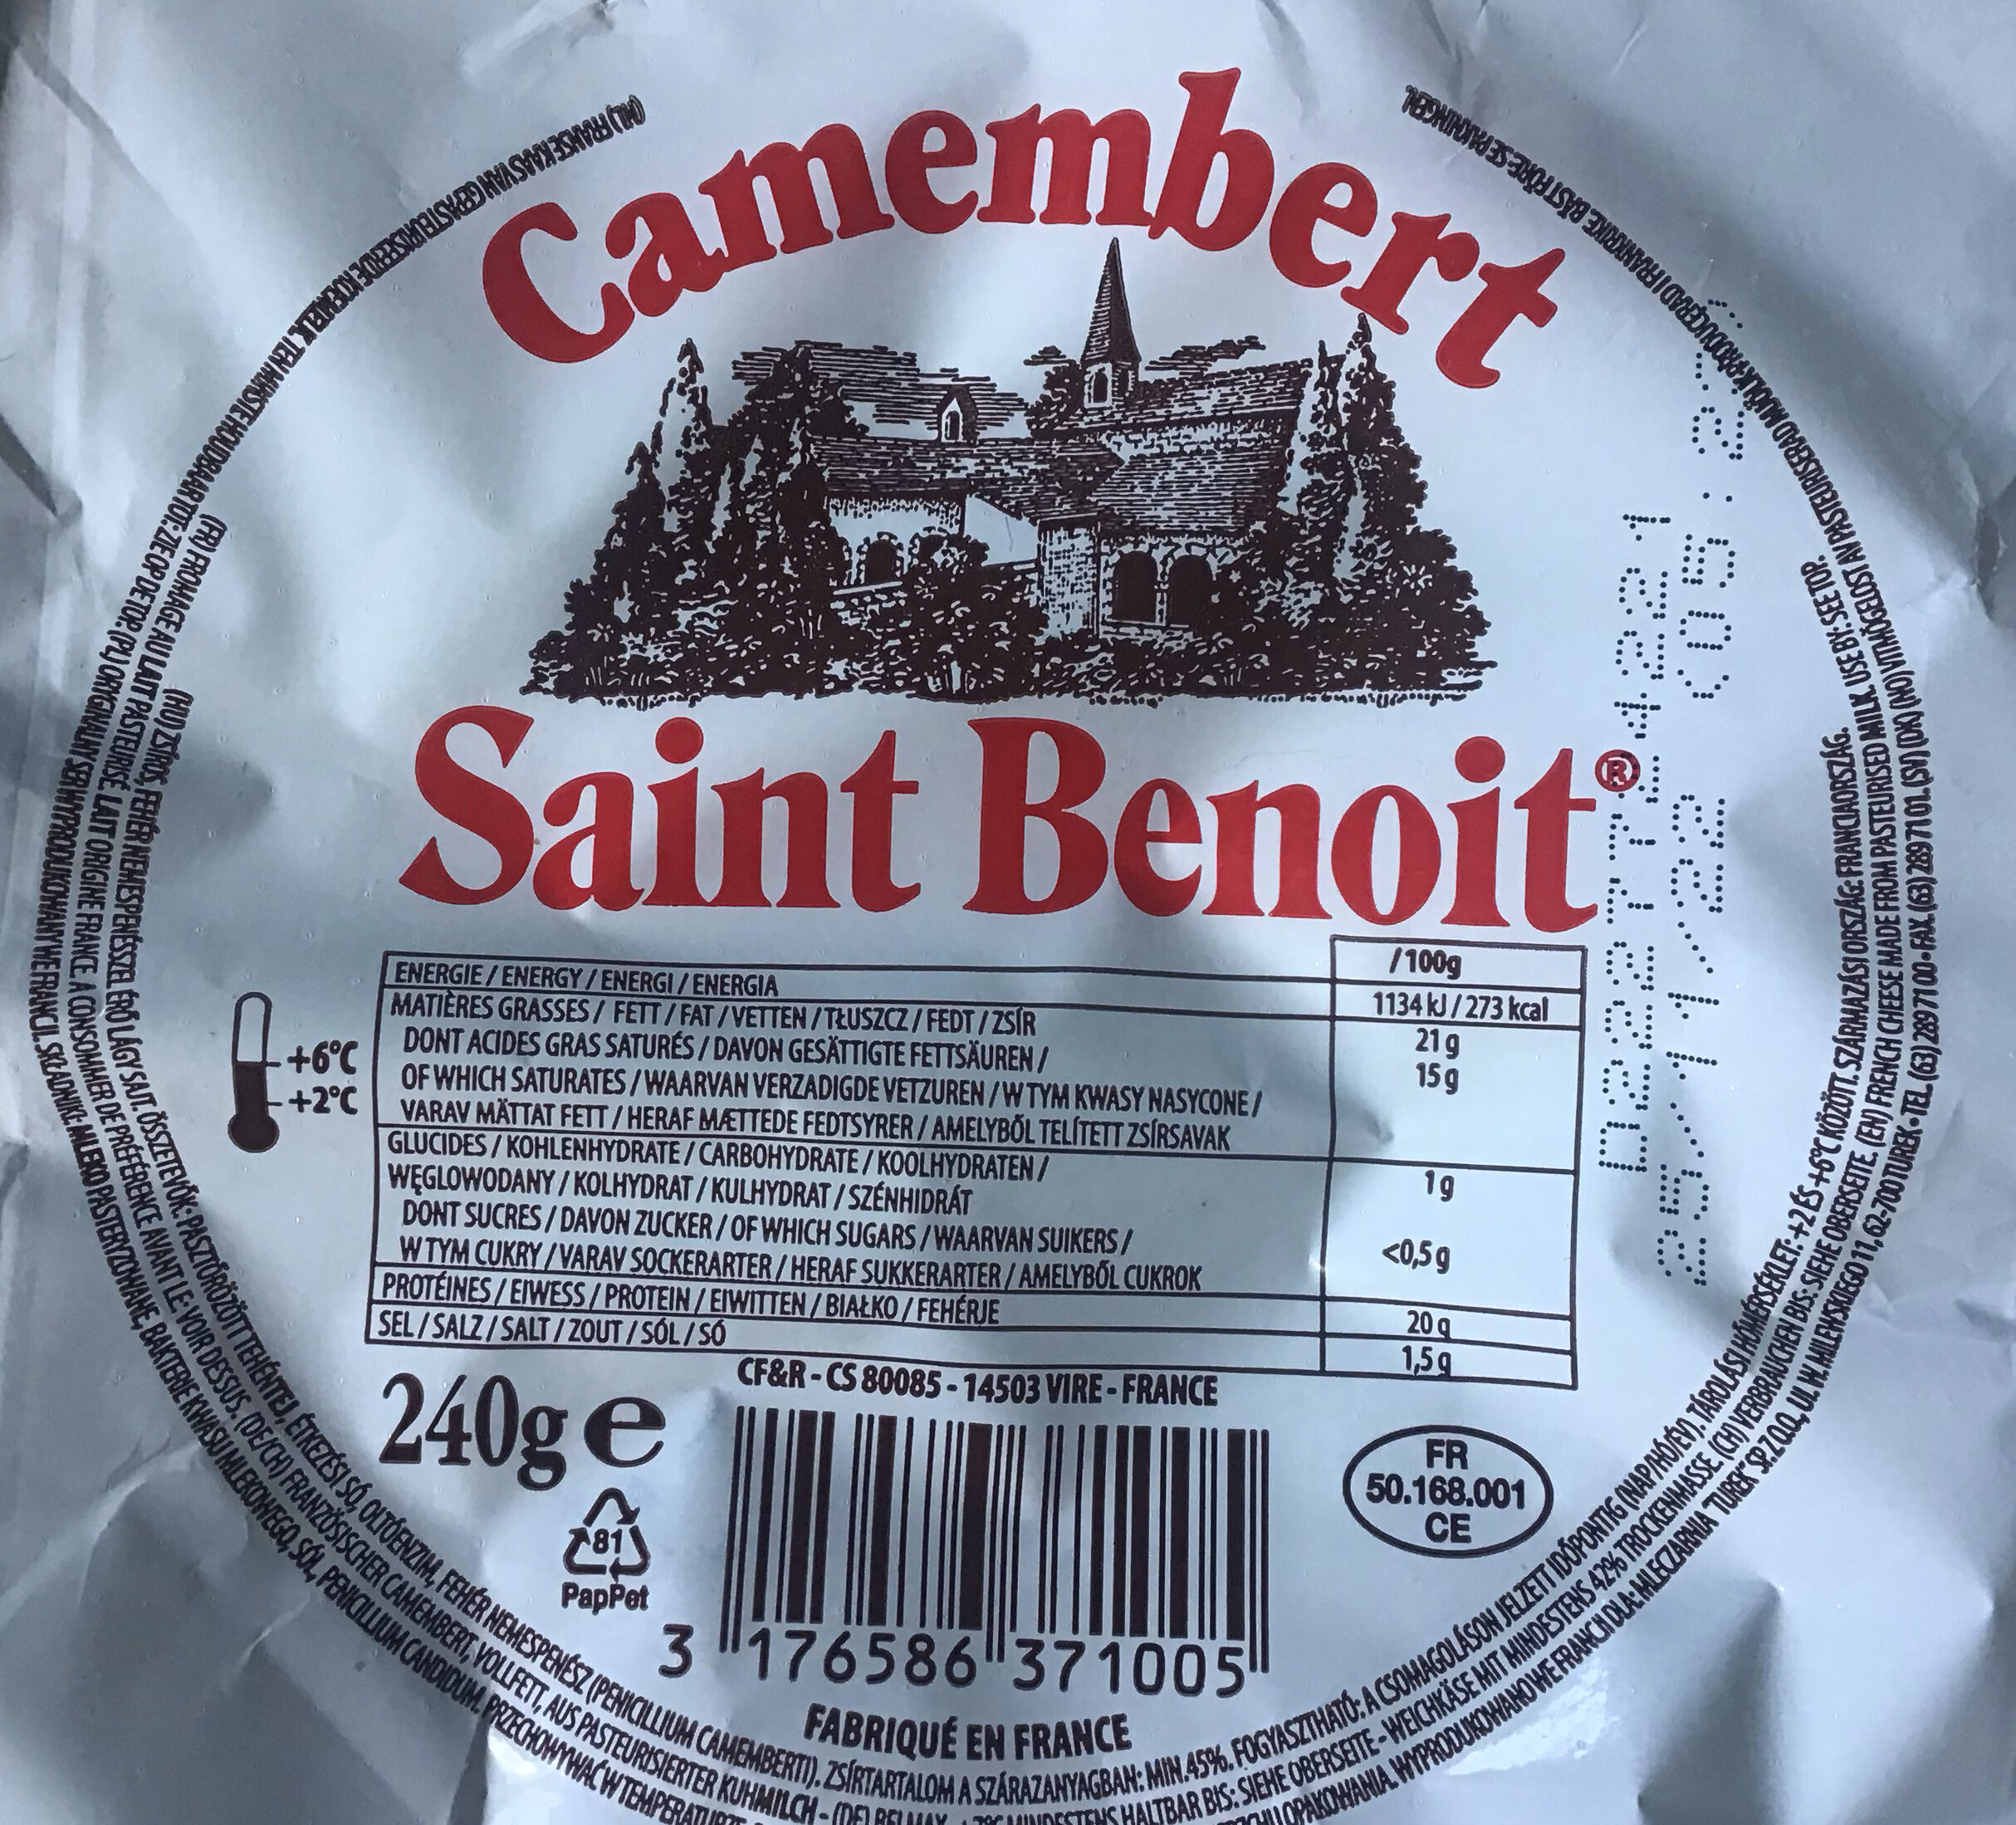 Camembert Saint-Benoît - Product - fr